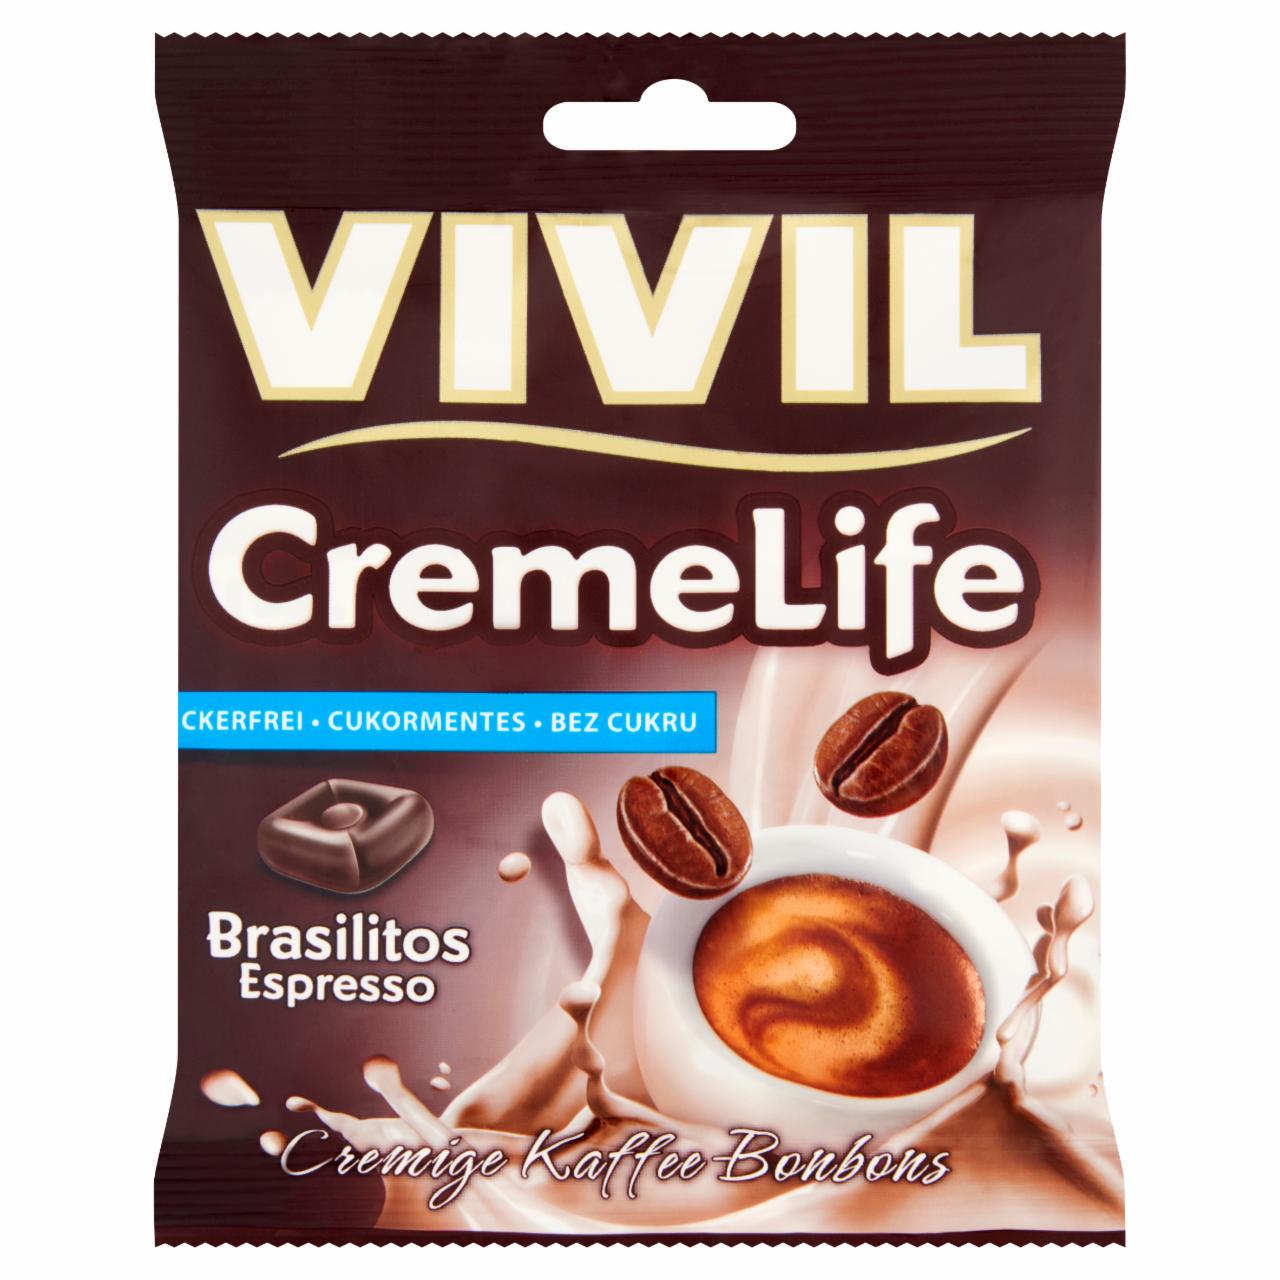 Fotografie - CremeLife Brasilitos Espresso zuckerfrei Vivil